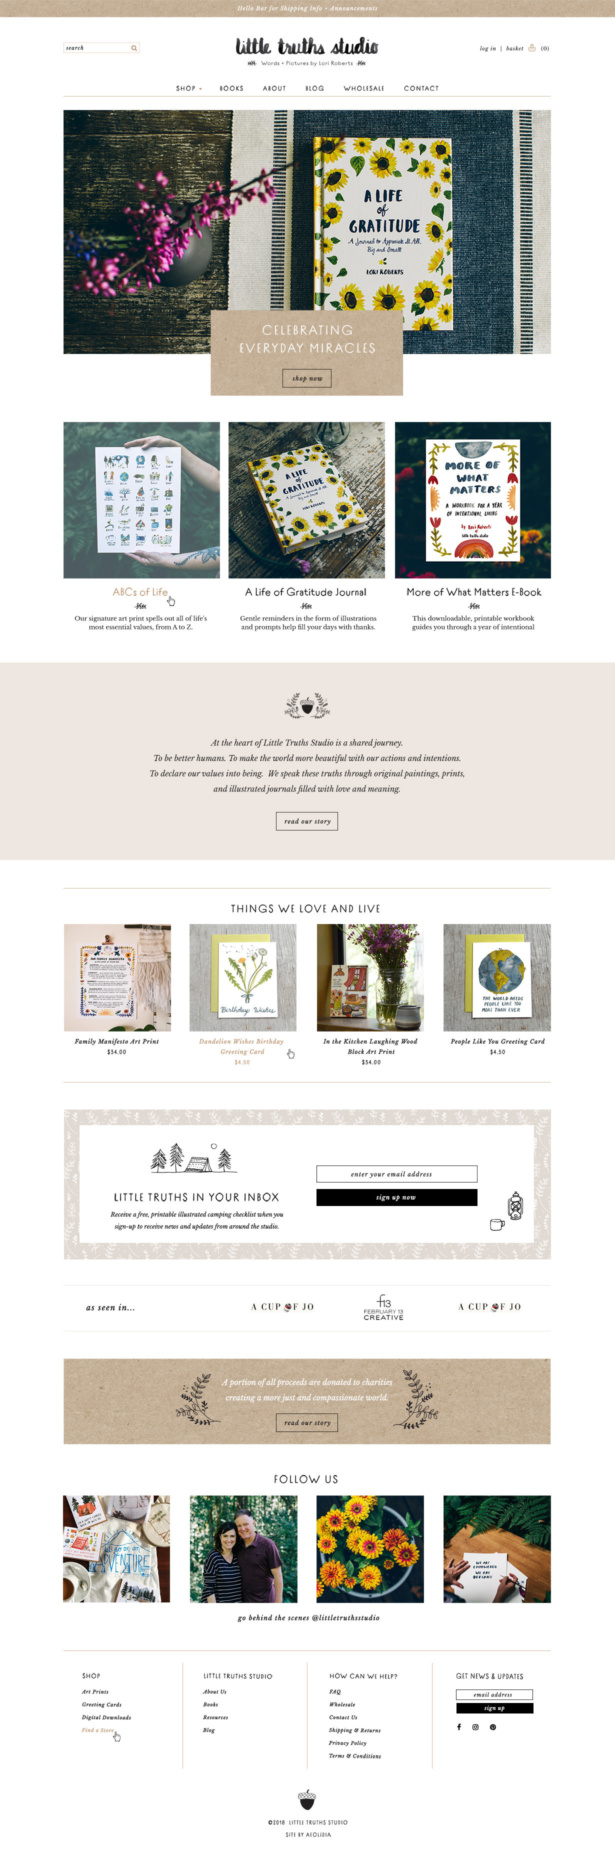 Little Truths Studio custom Shopify website for artist and illustrator Lori Roberts